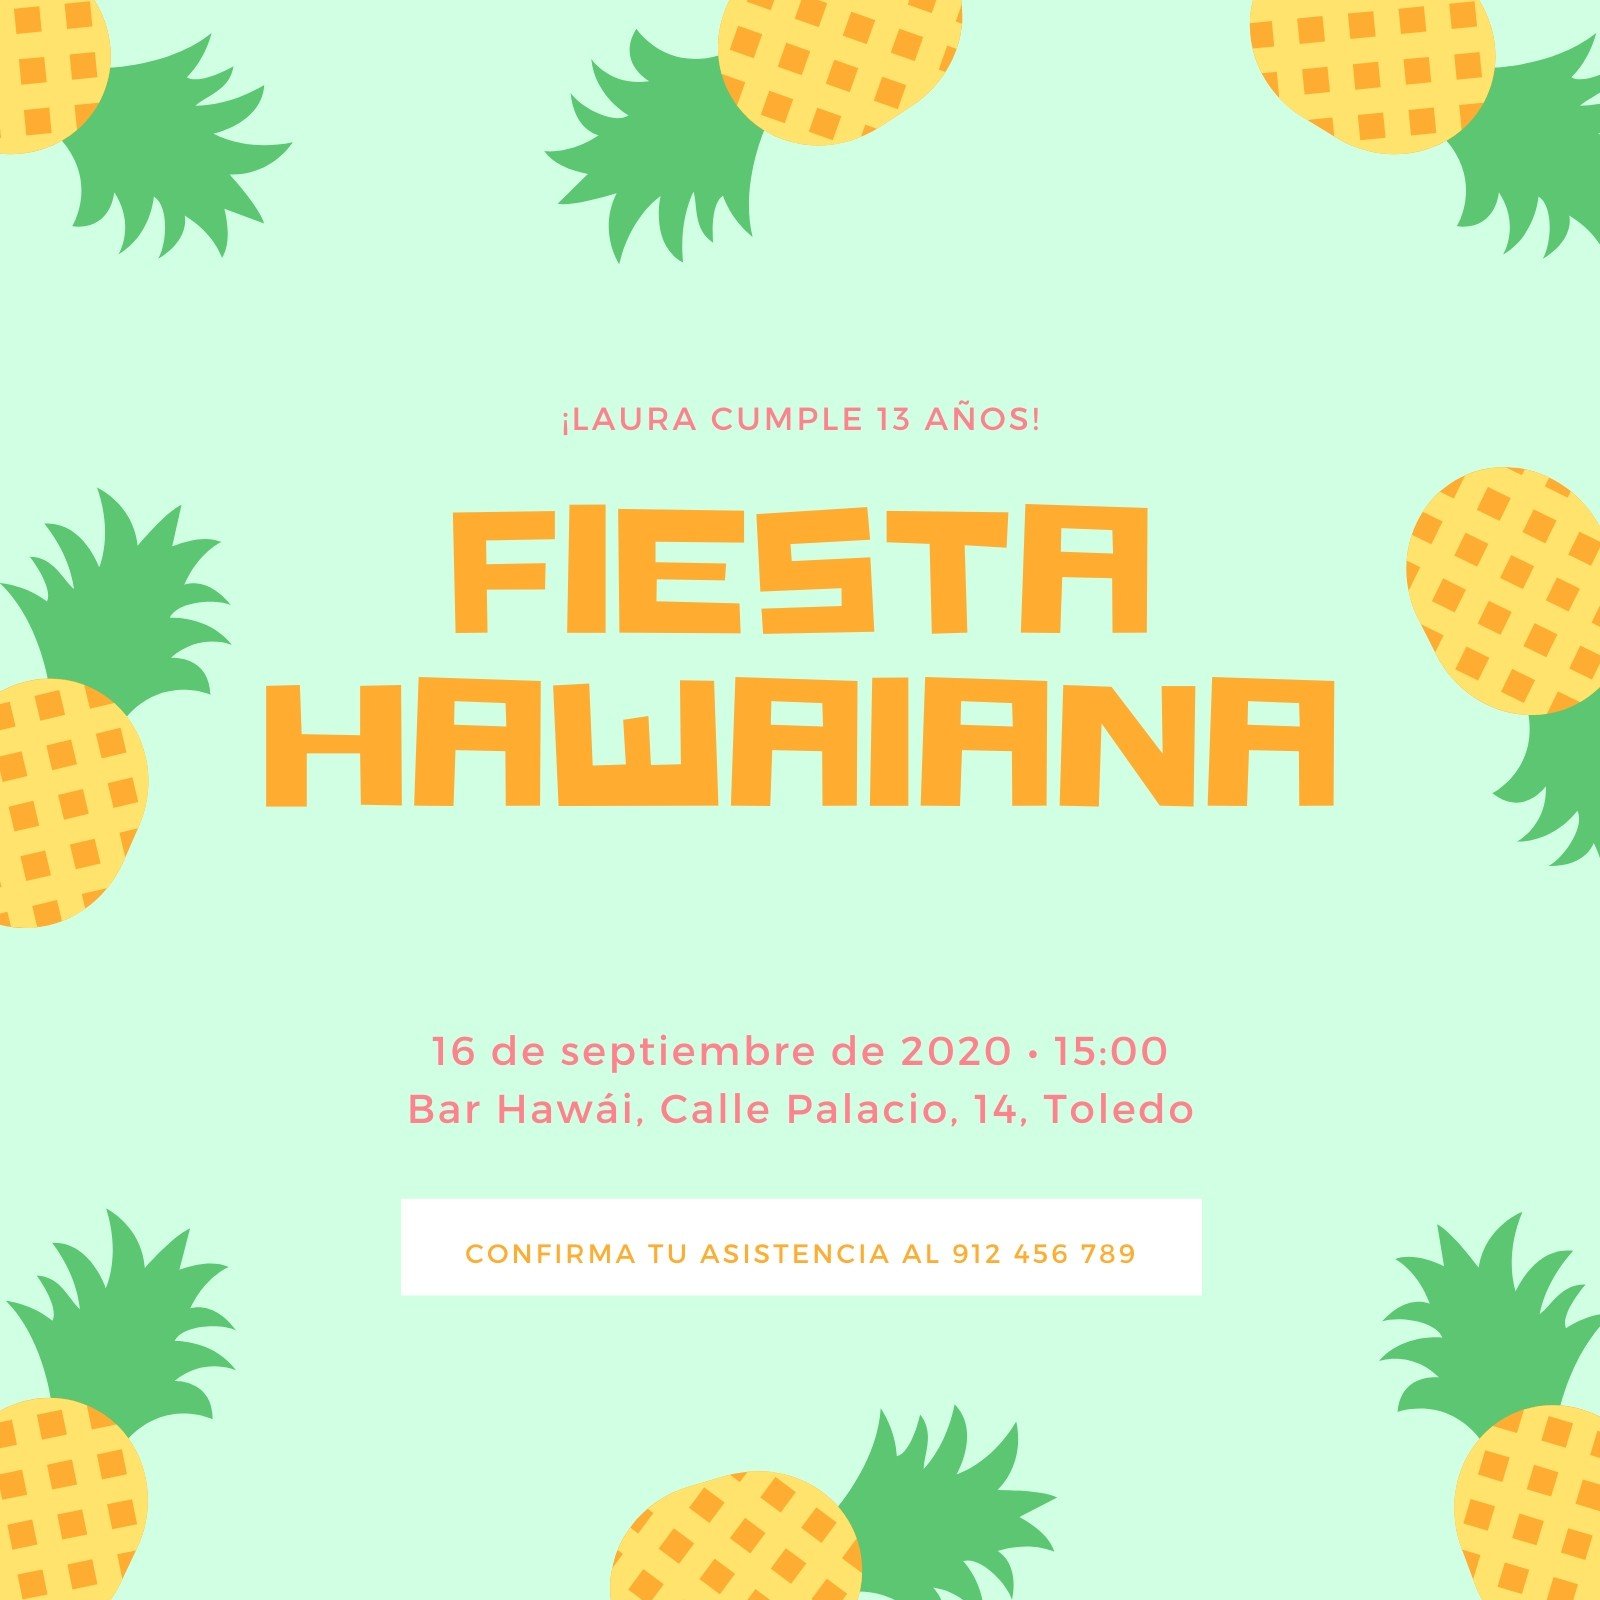 Fiesta Hawaiana: Ideas para organizar la mejor fiesta Hawai